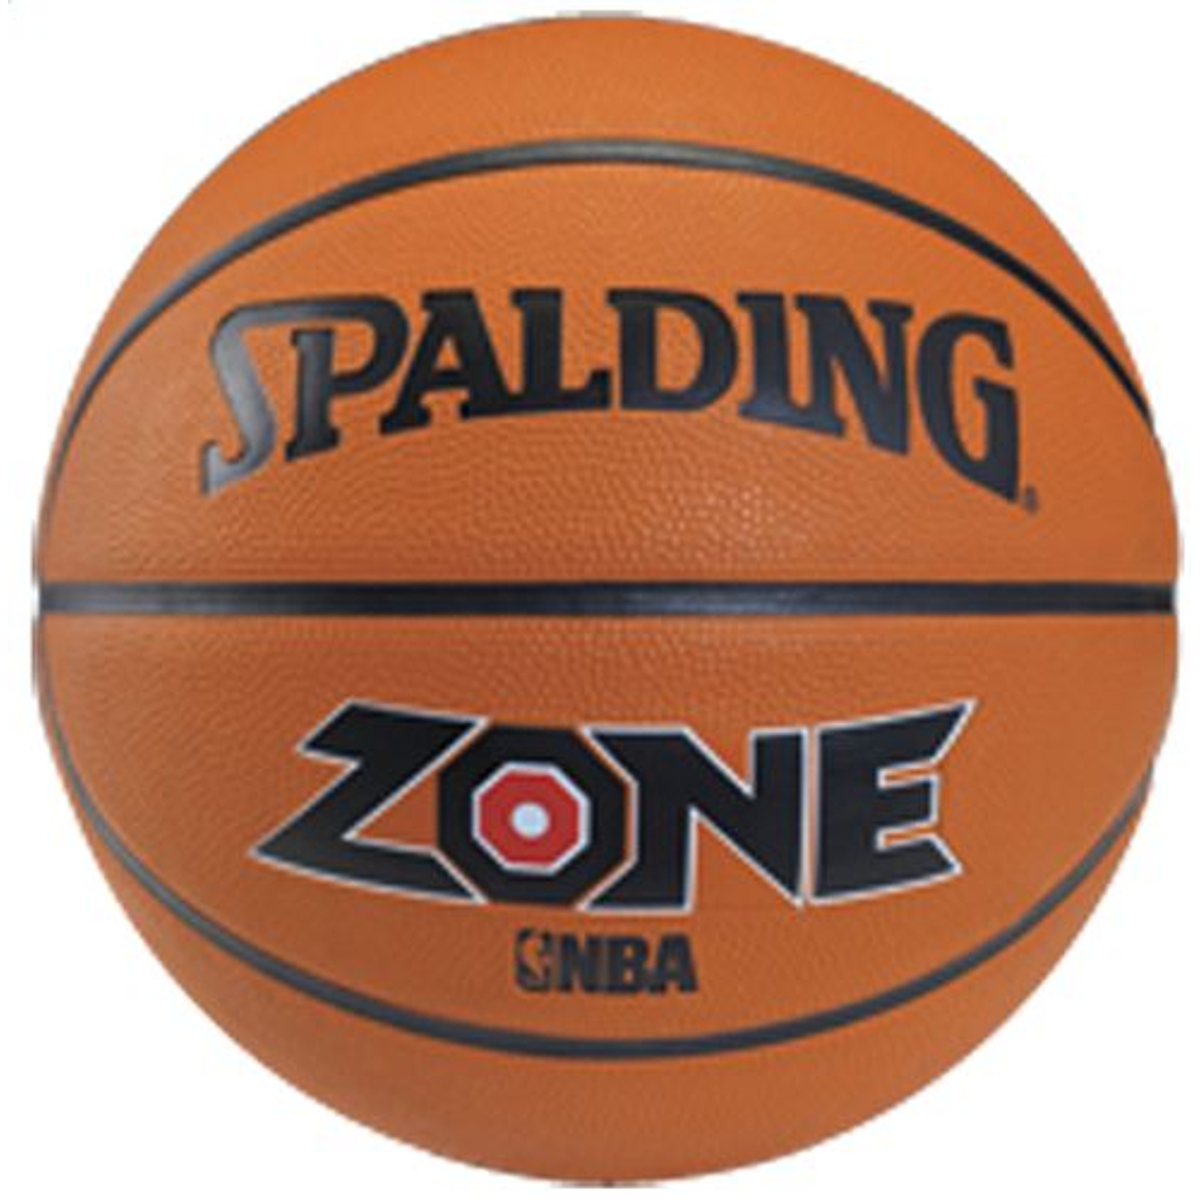 Spalding Zone Brick Basketbal